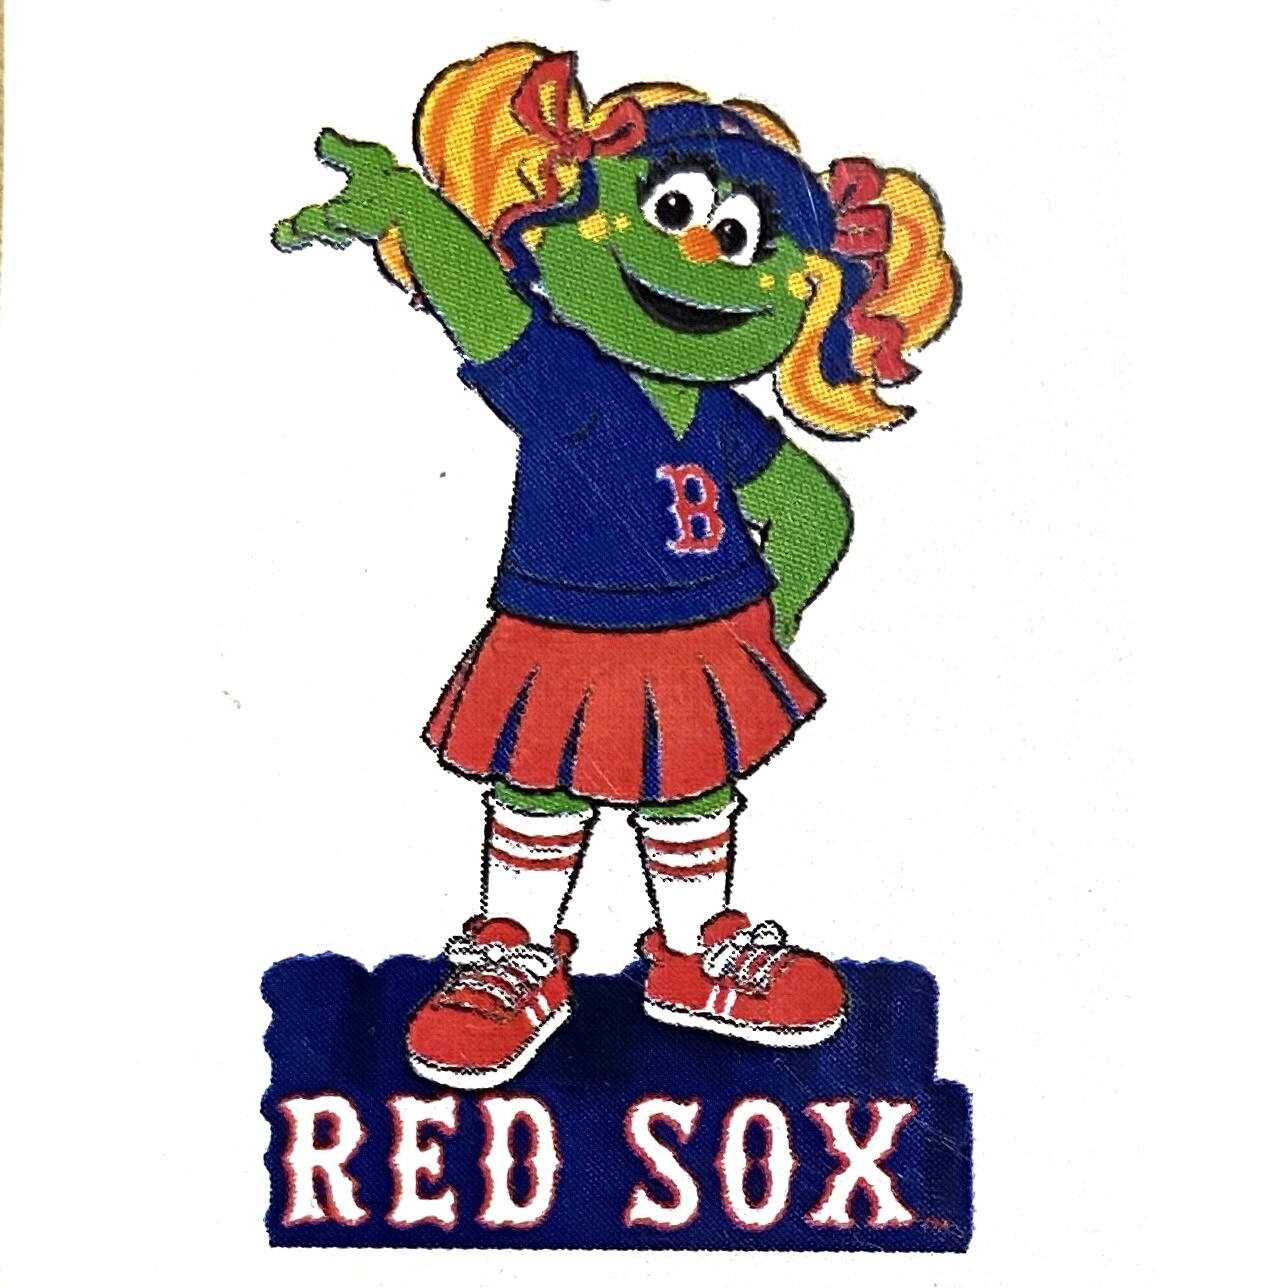 red sox mascot